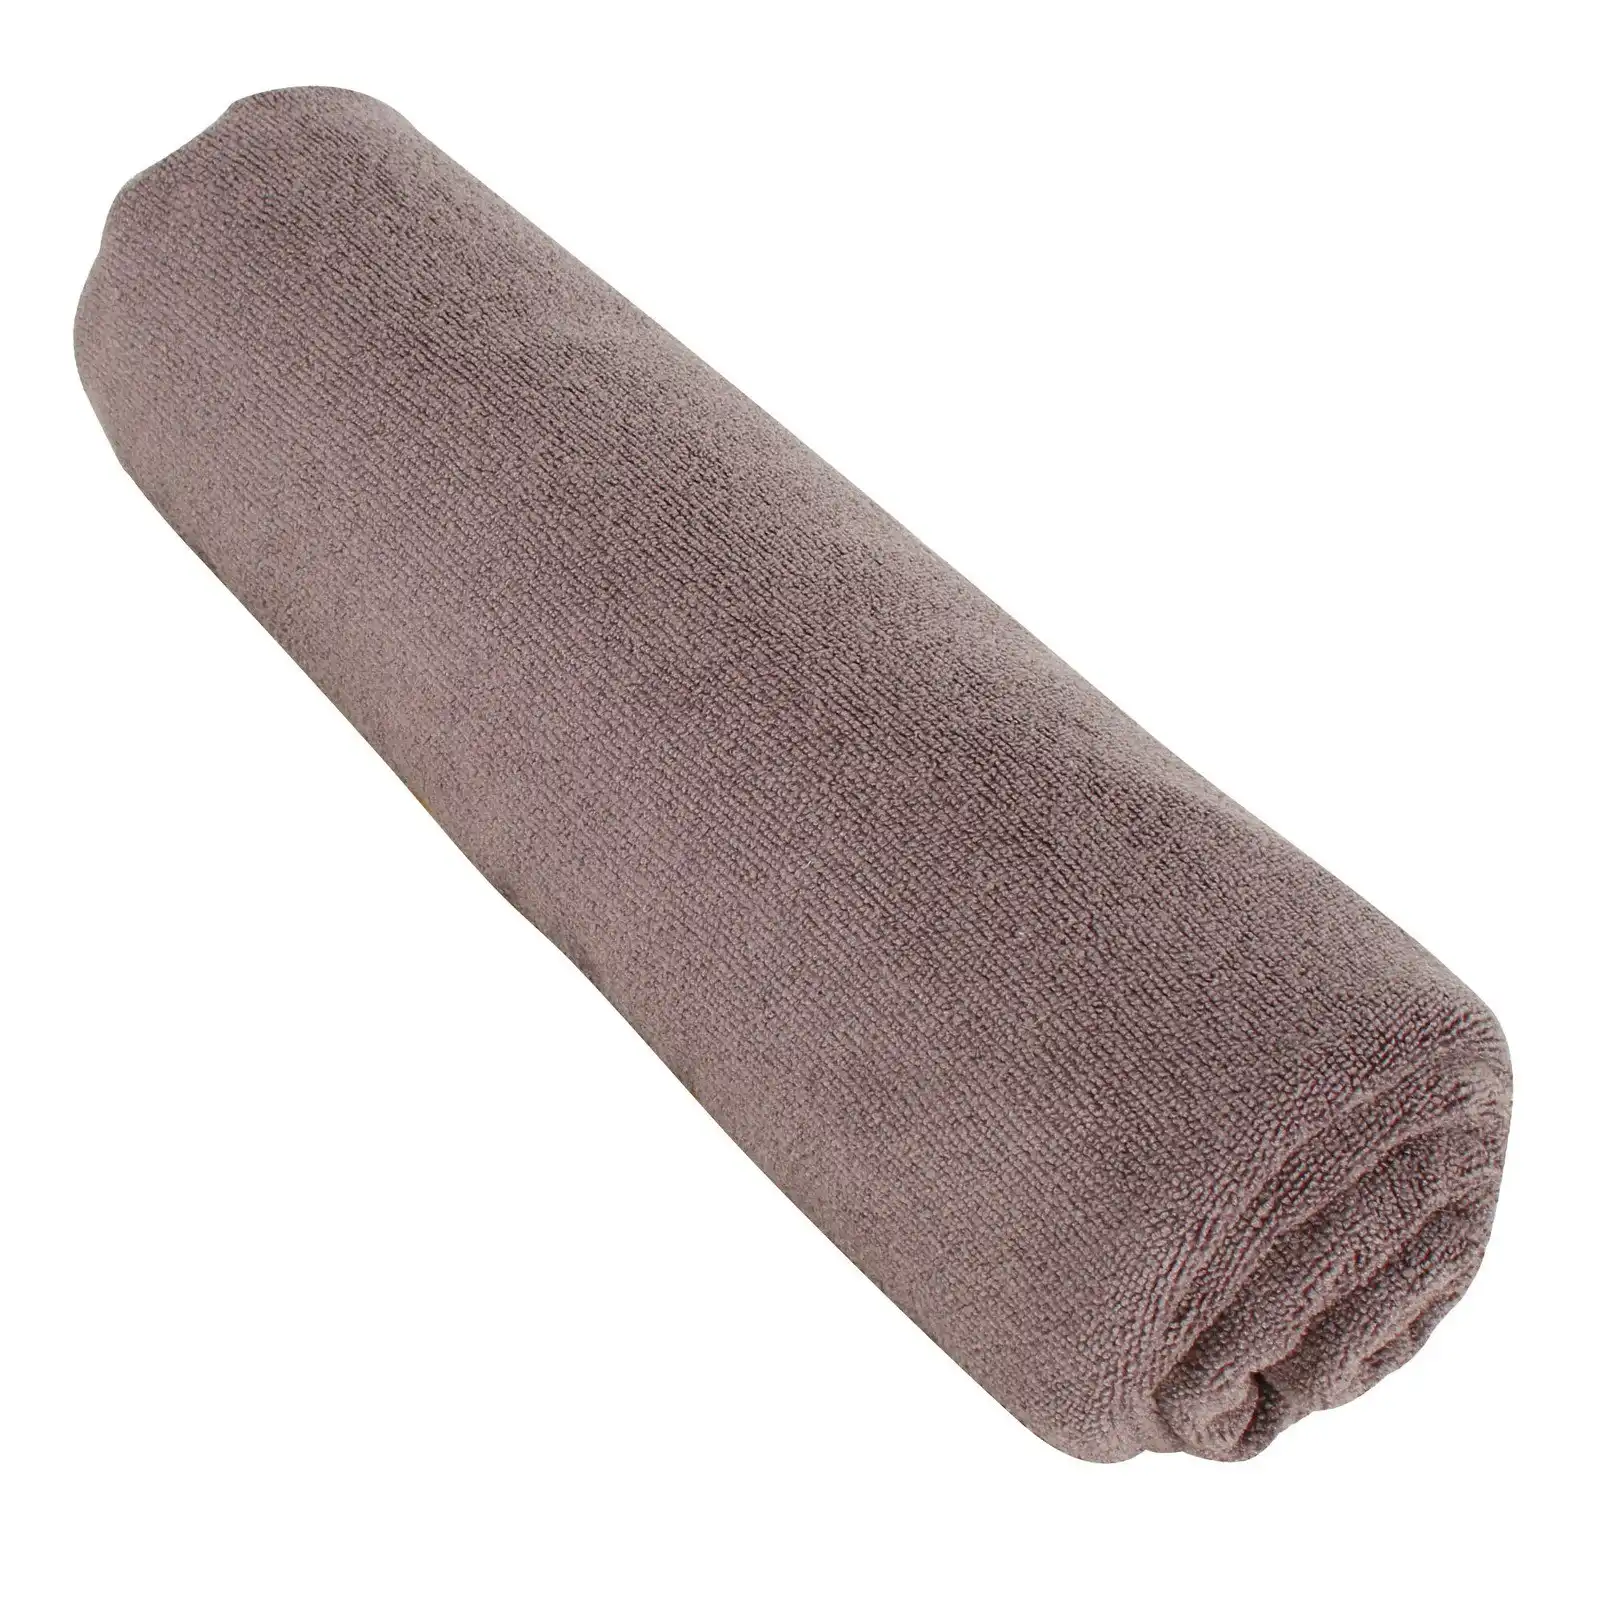 Wildtrak 130x80cm Quick Dry Soft Camp Towel w/ Bag Large Travel/Camping Grey